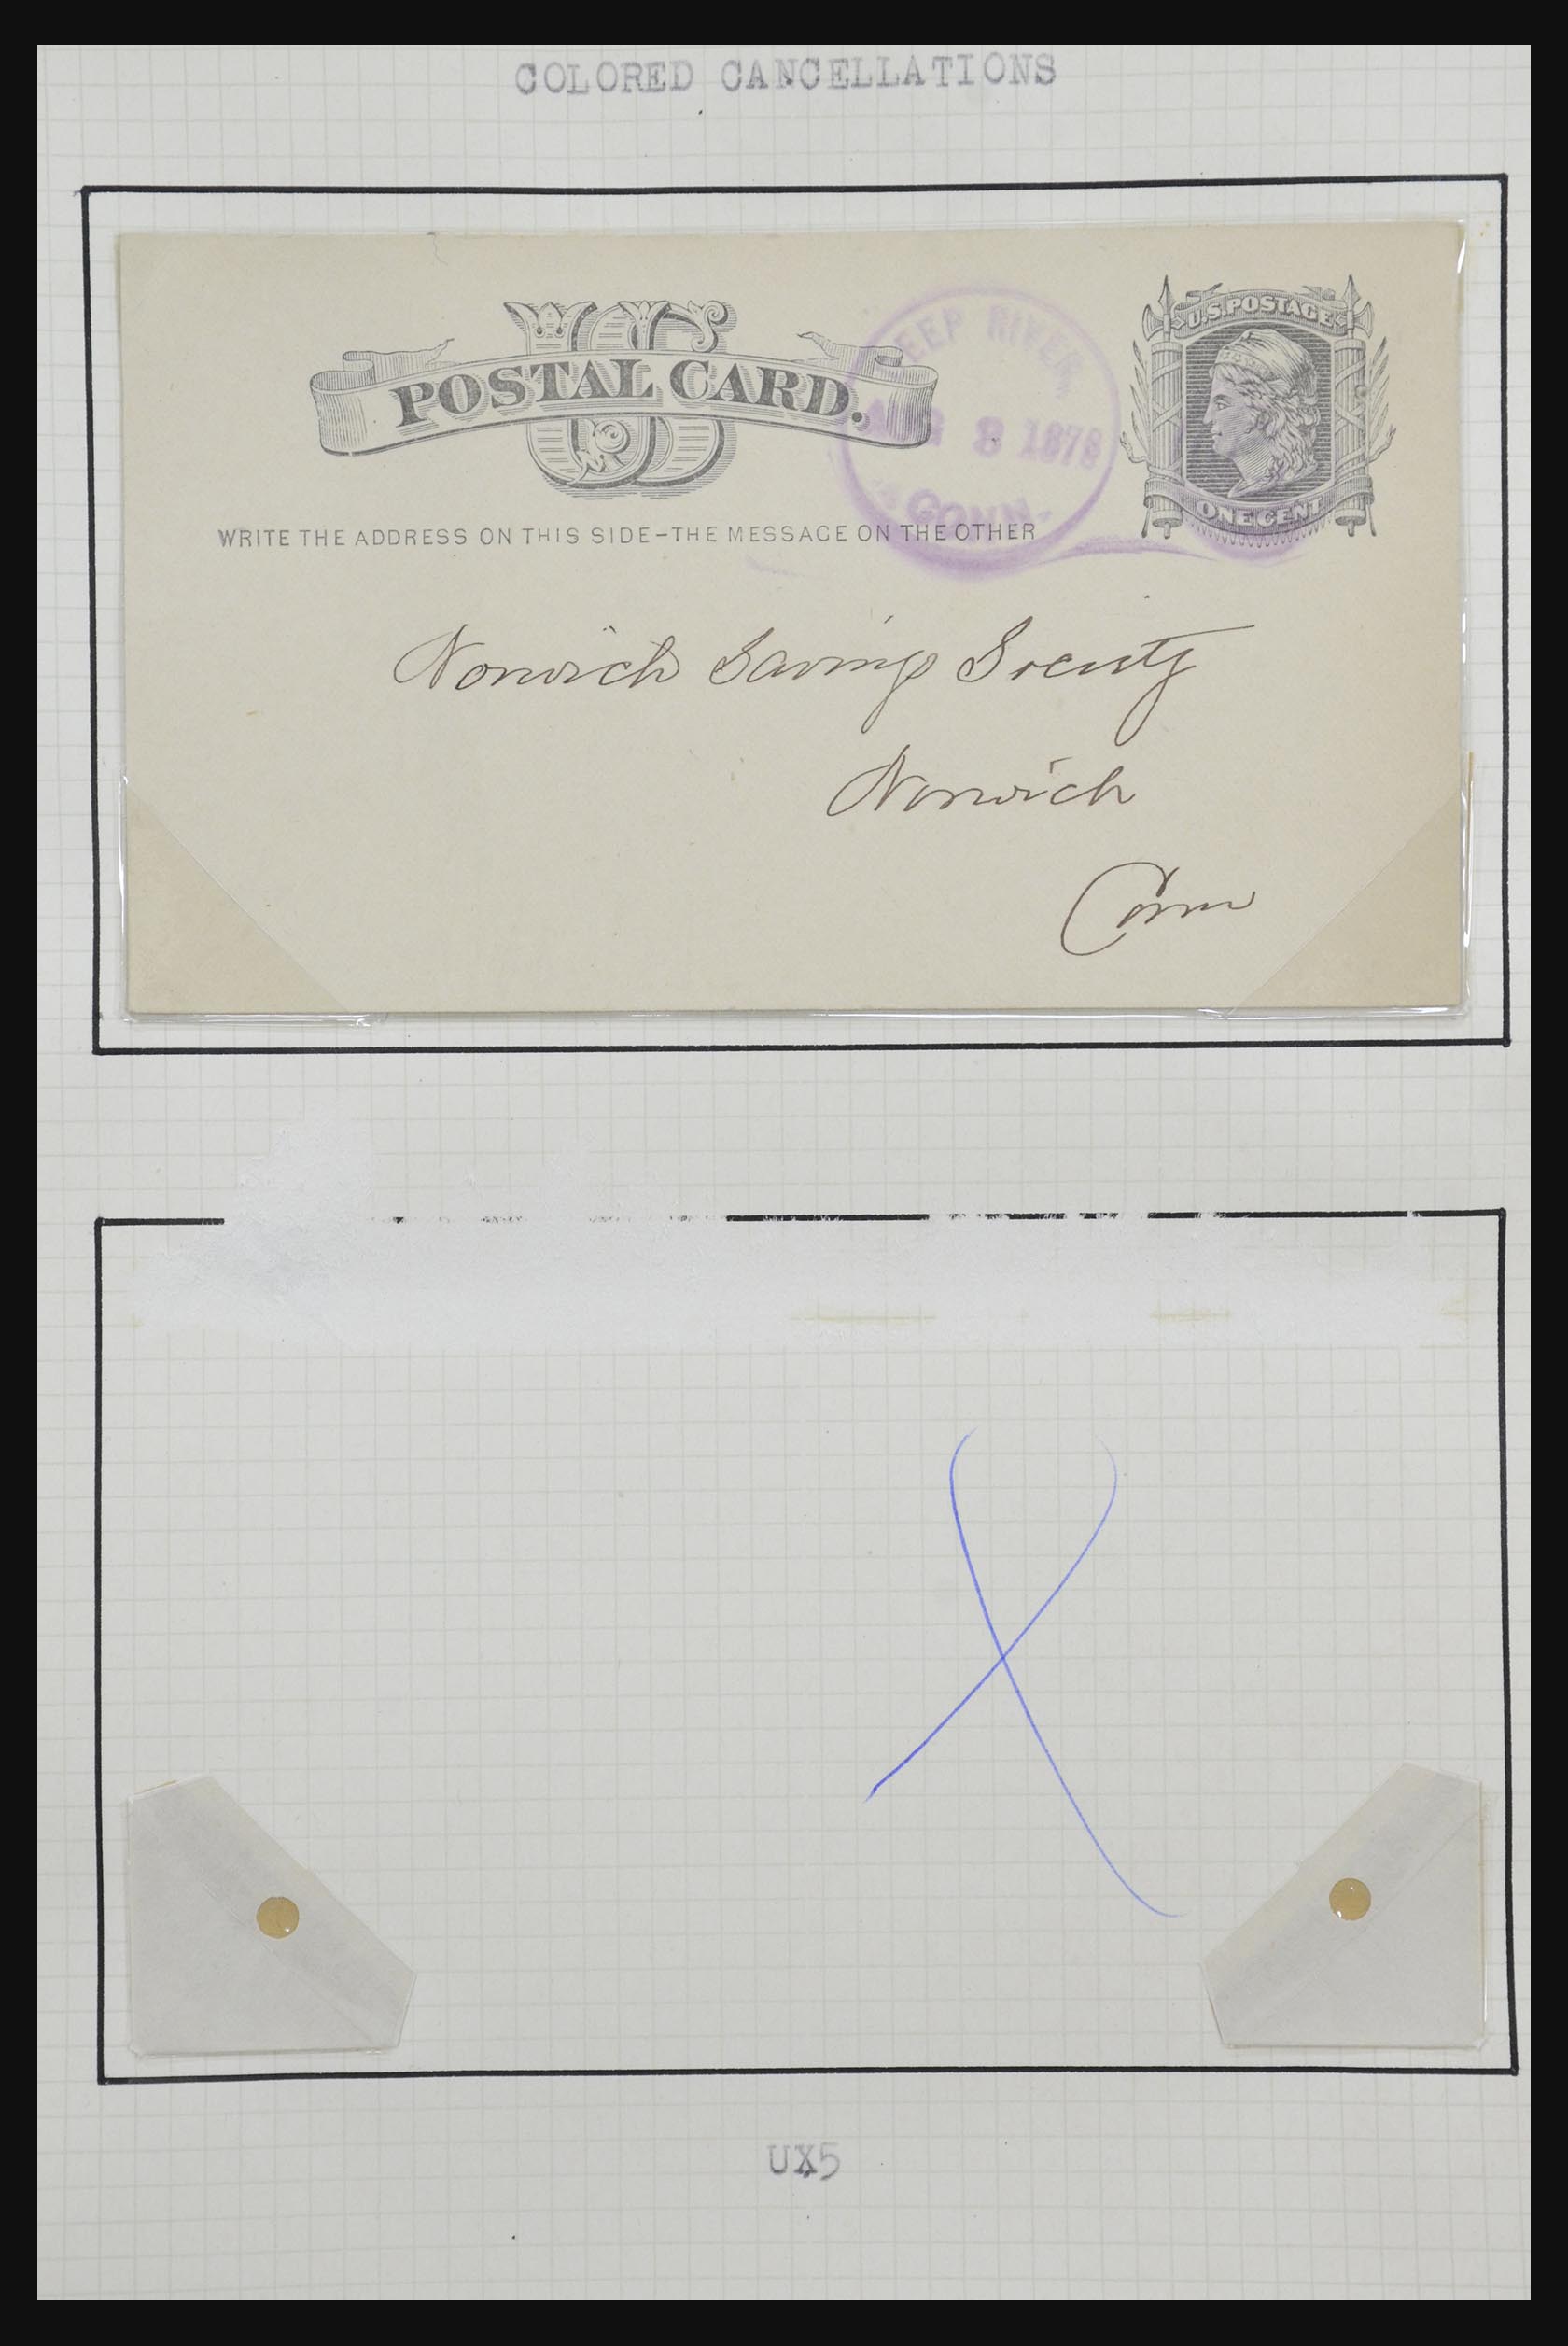 32209 029 - 32209 USA postal cards 1873-1950.